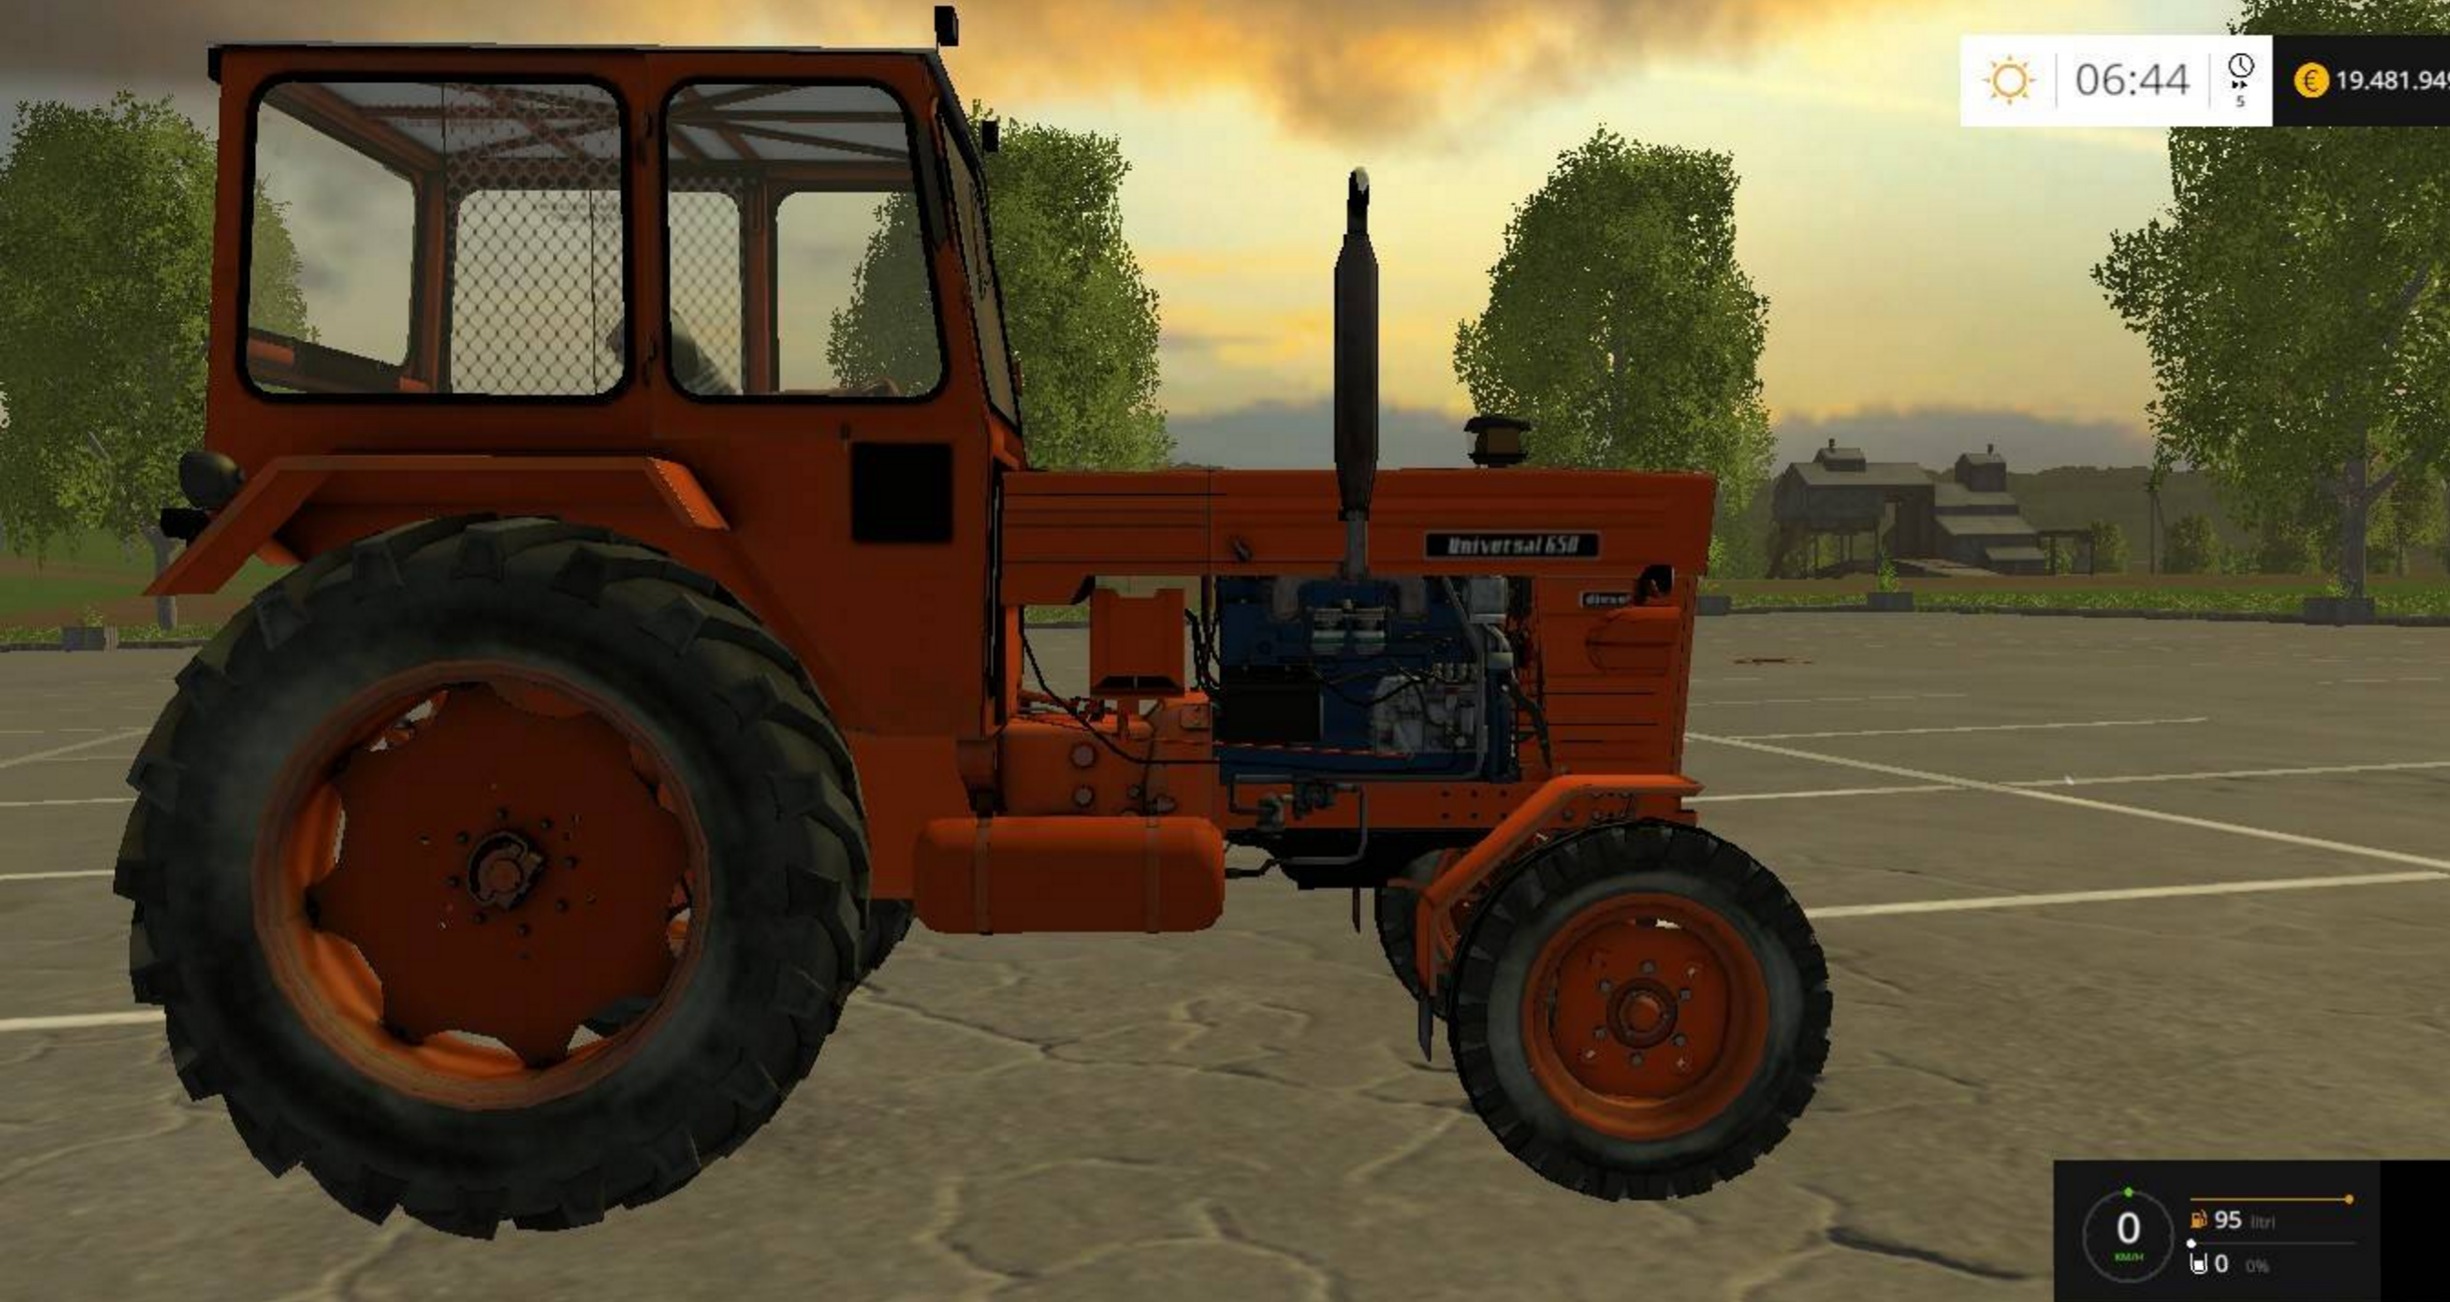 utb-universal-tractor-650-fs15-mod-download